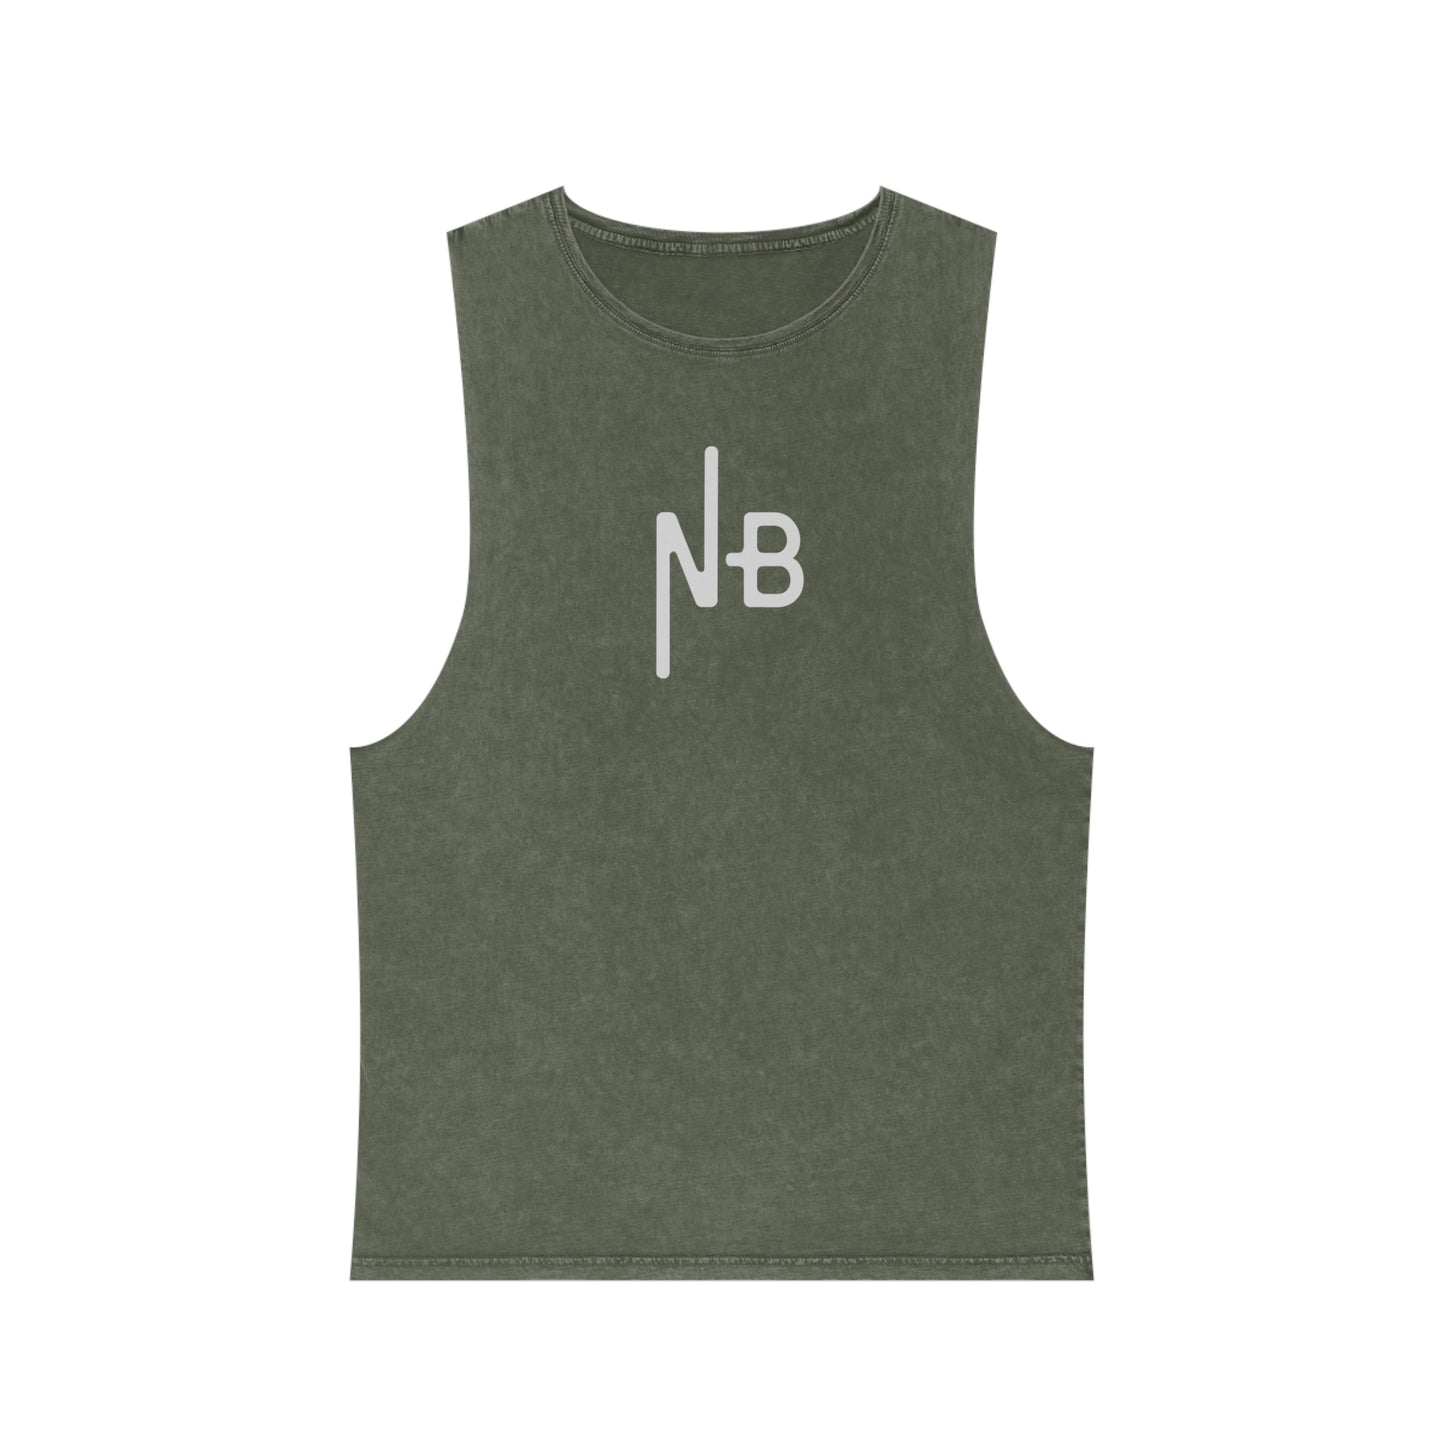 Stonewash Tank Top with NB Northern Beaches logo